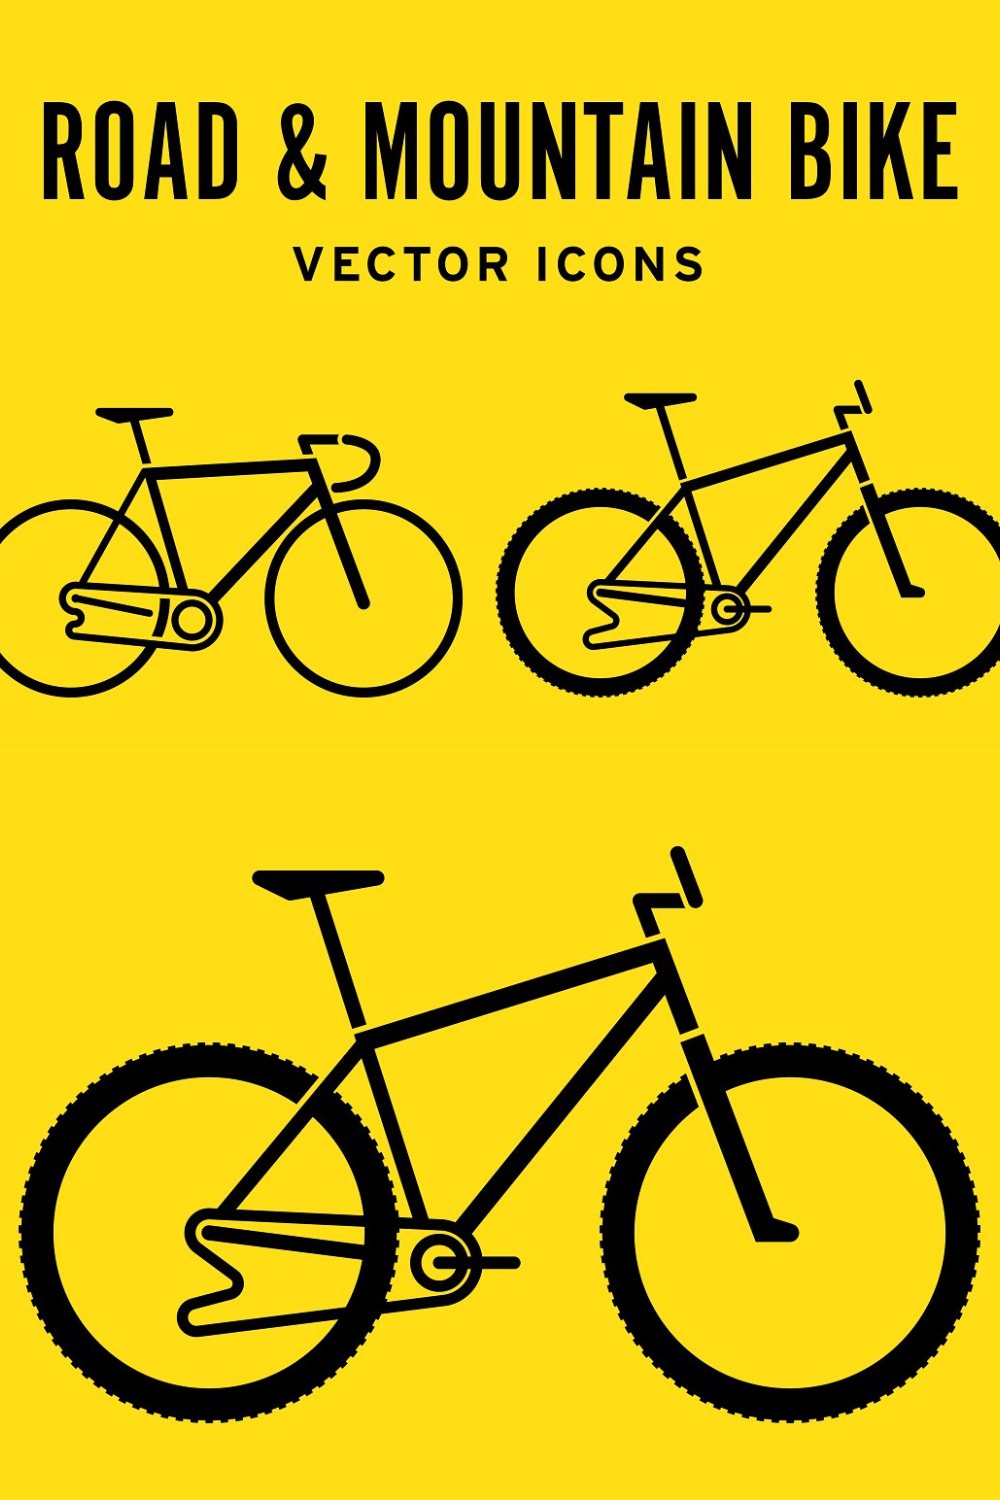 Road & Mountain Bike Icons - Pinterest.